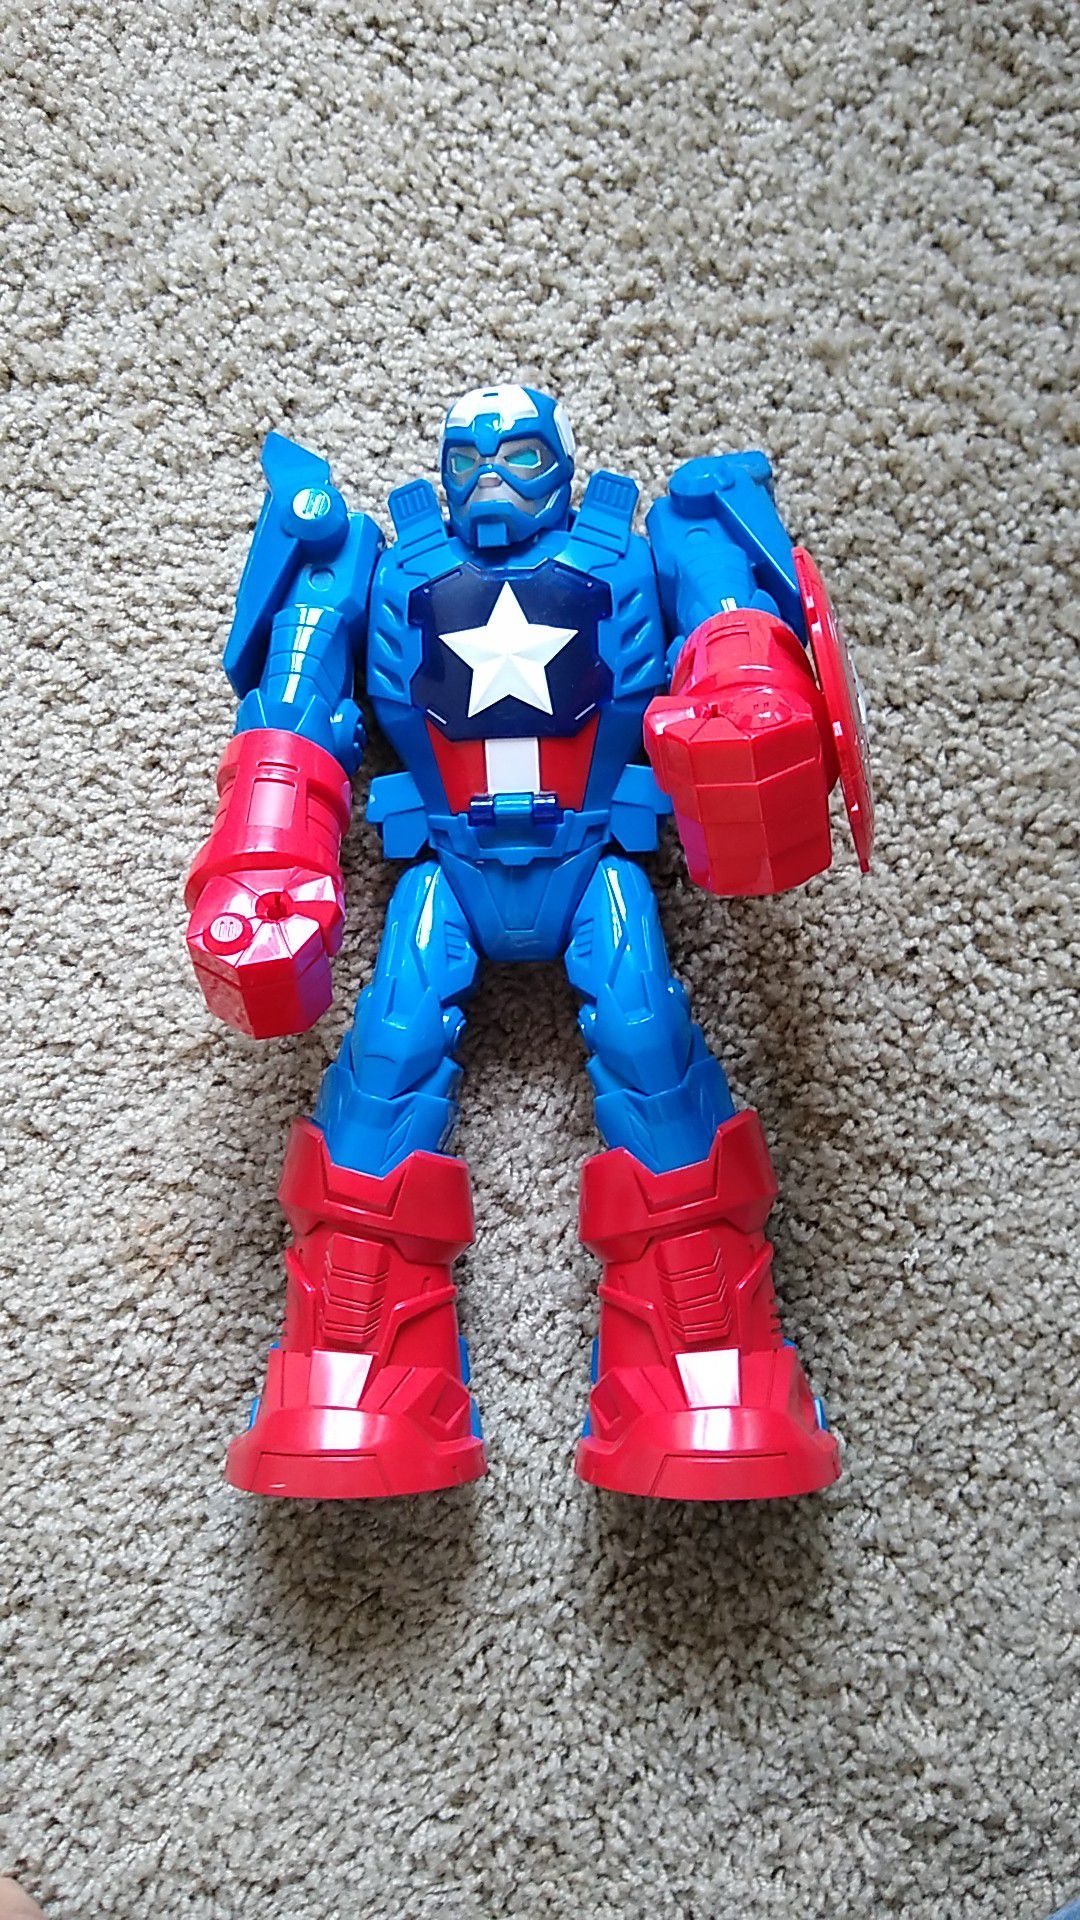 12" Marvel Captain America figure